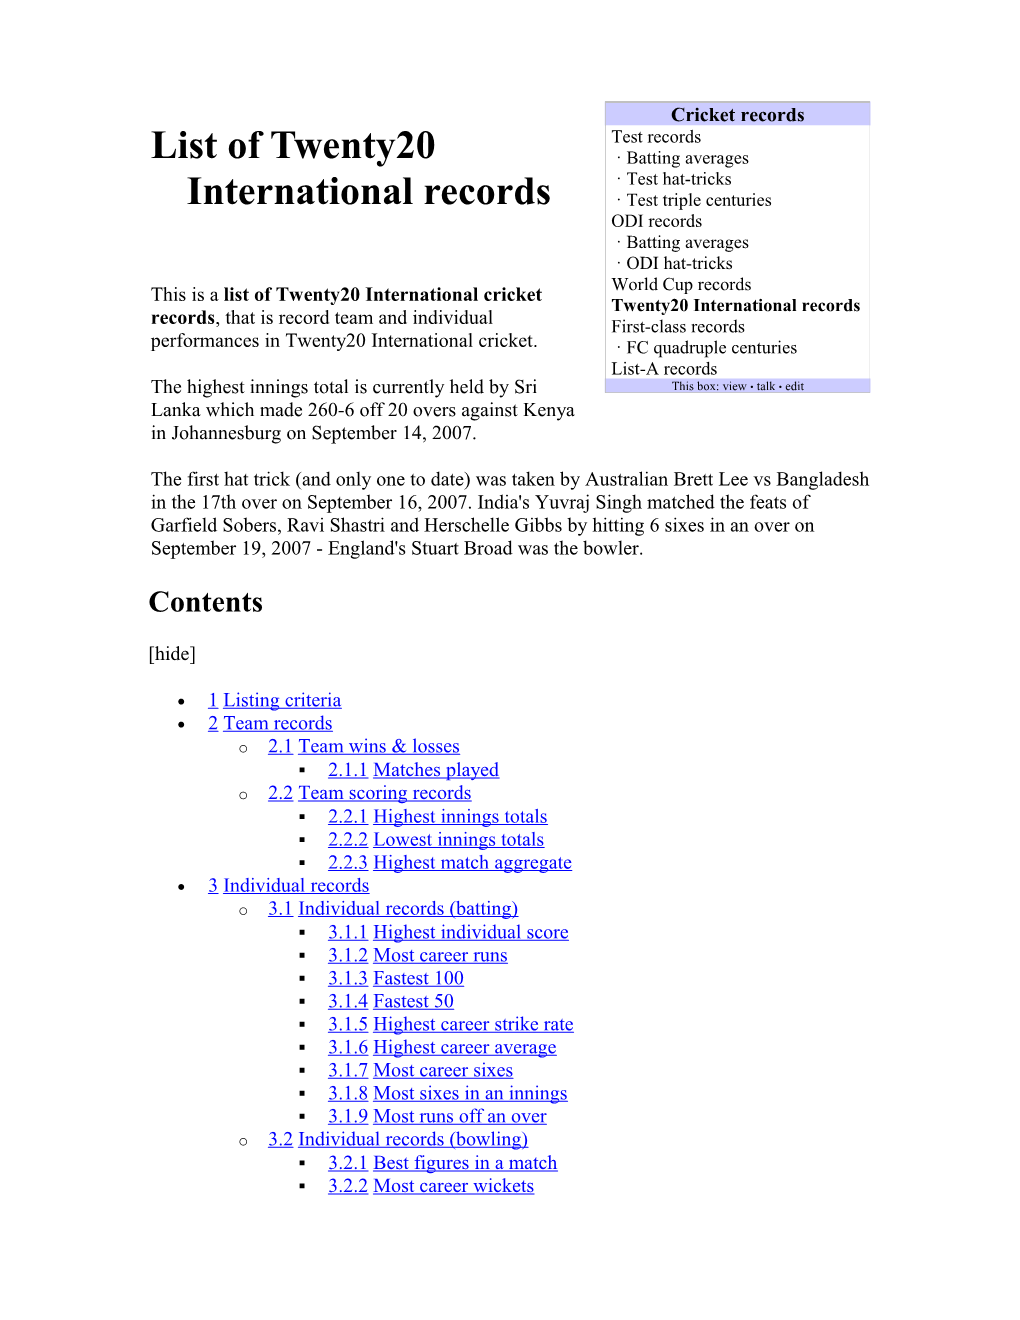 List of Twenty20 International Records